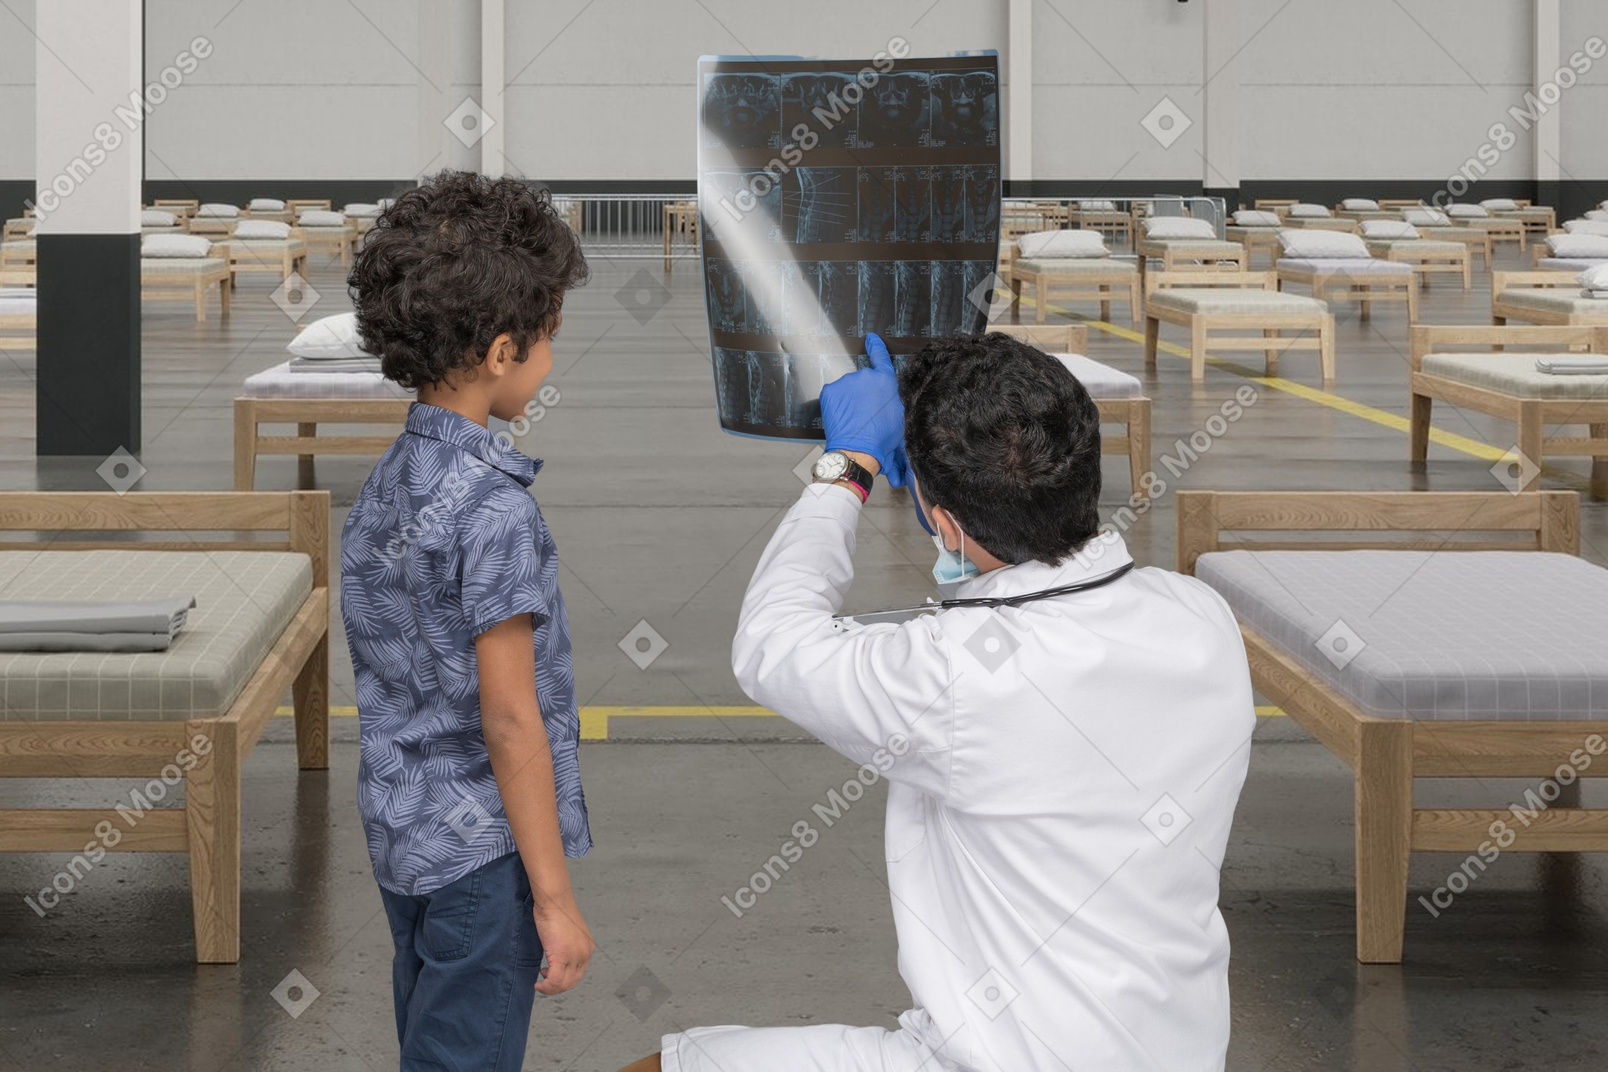 X線画像を見ている医師と小さな男の子